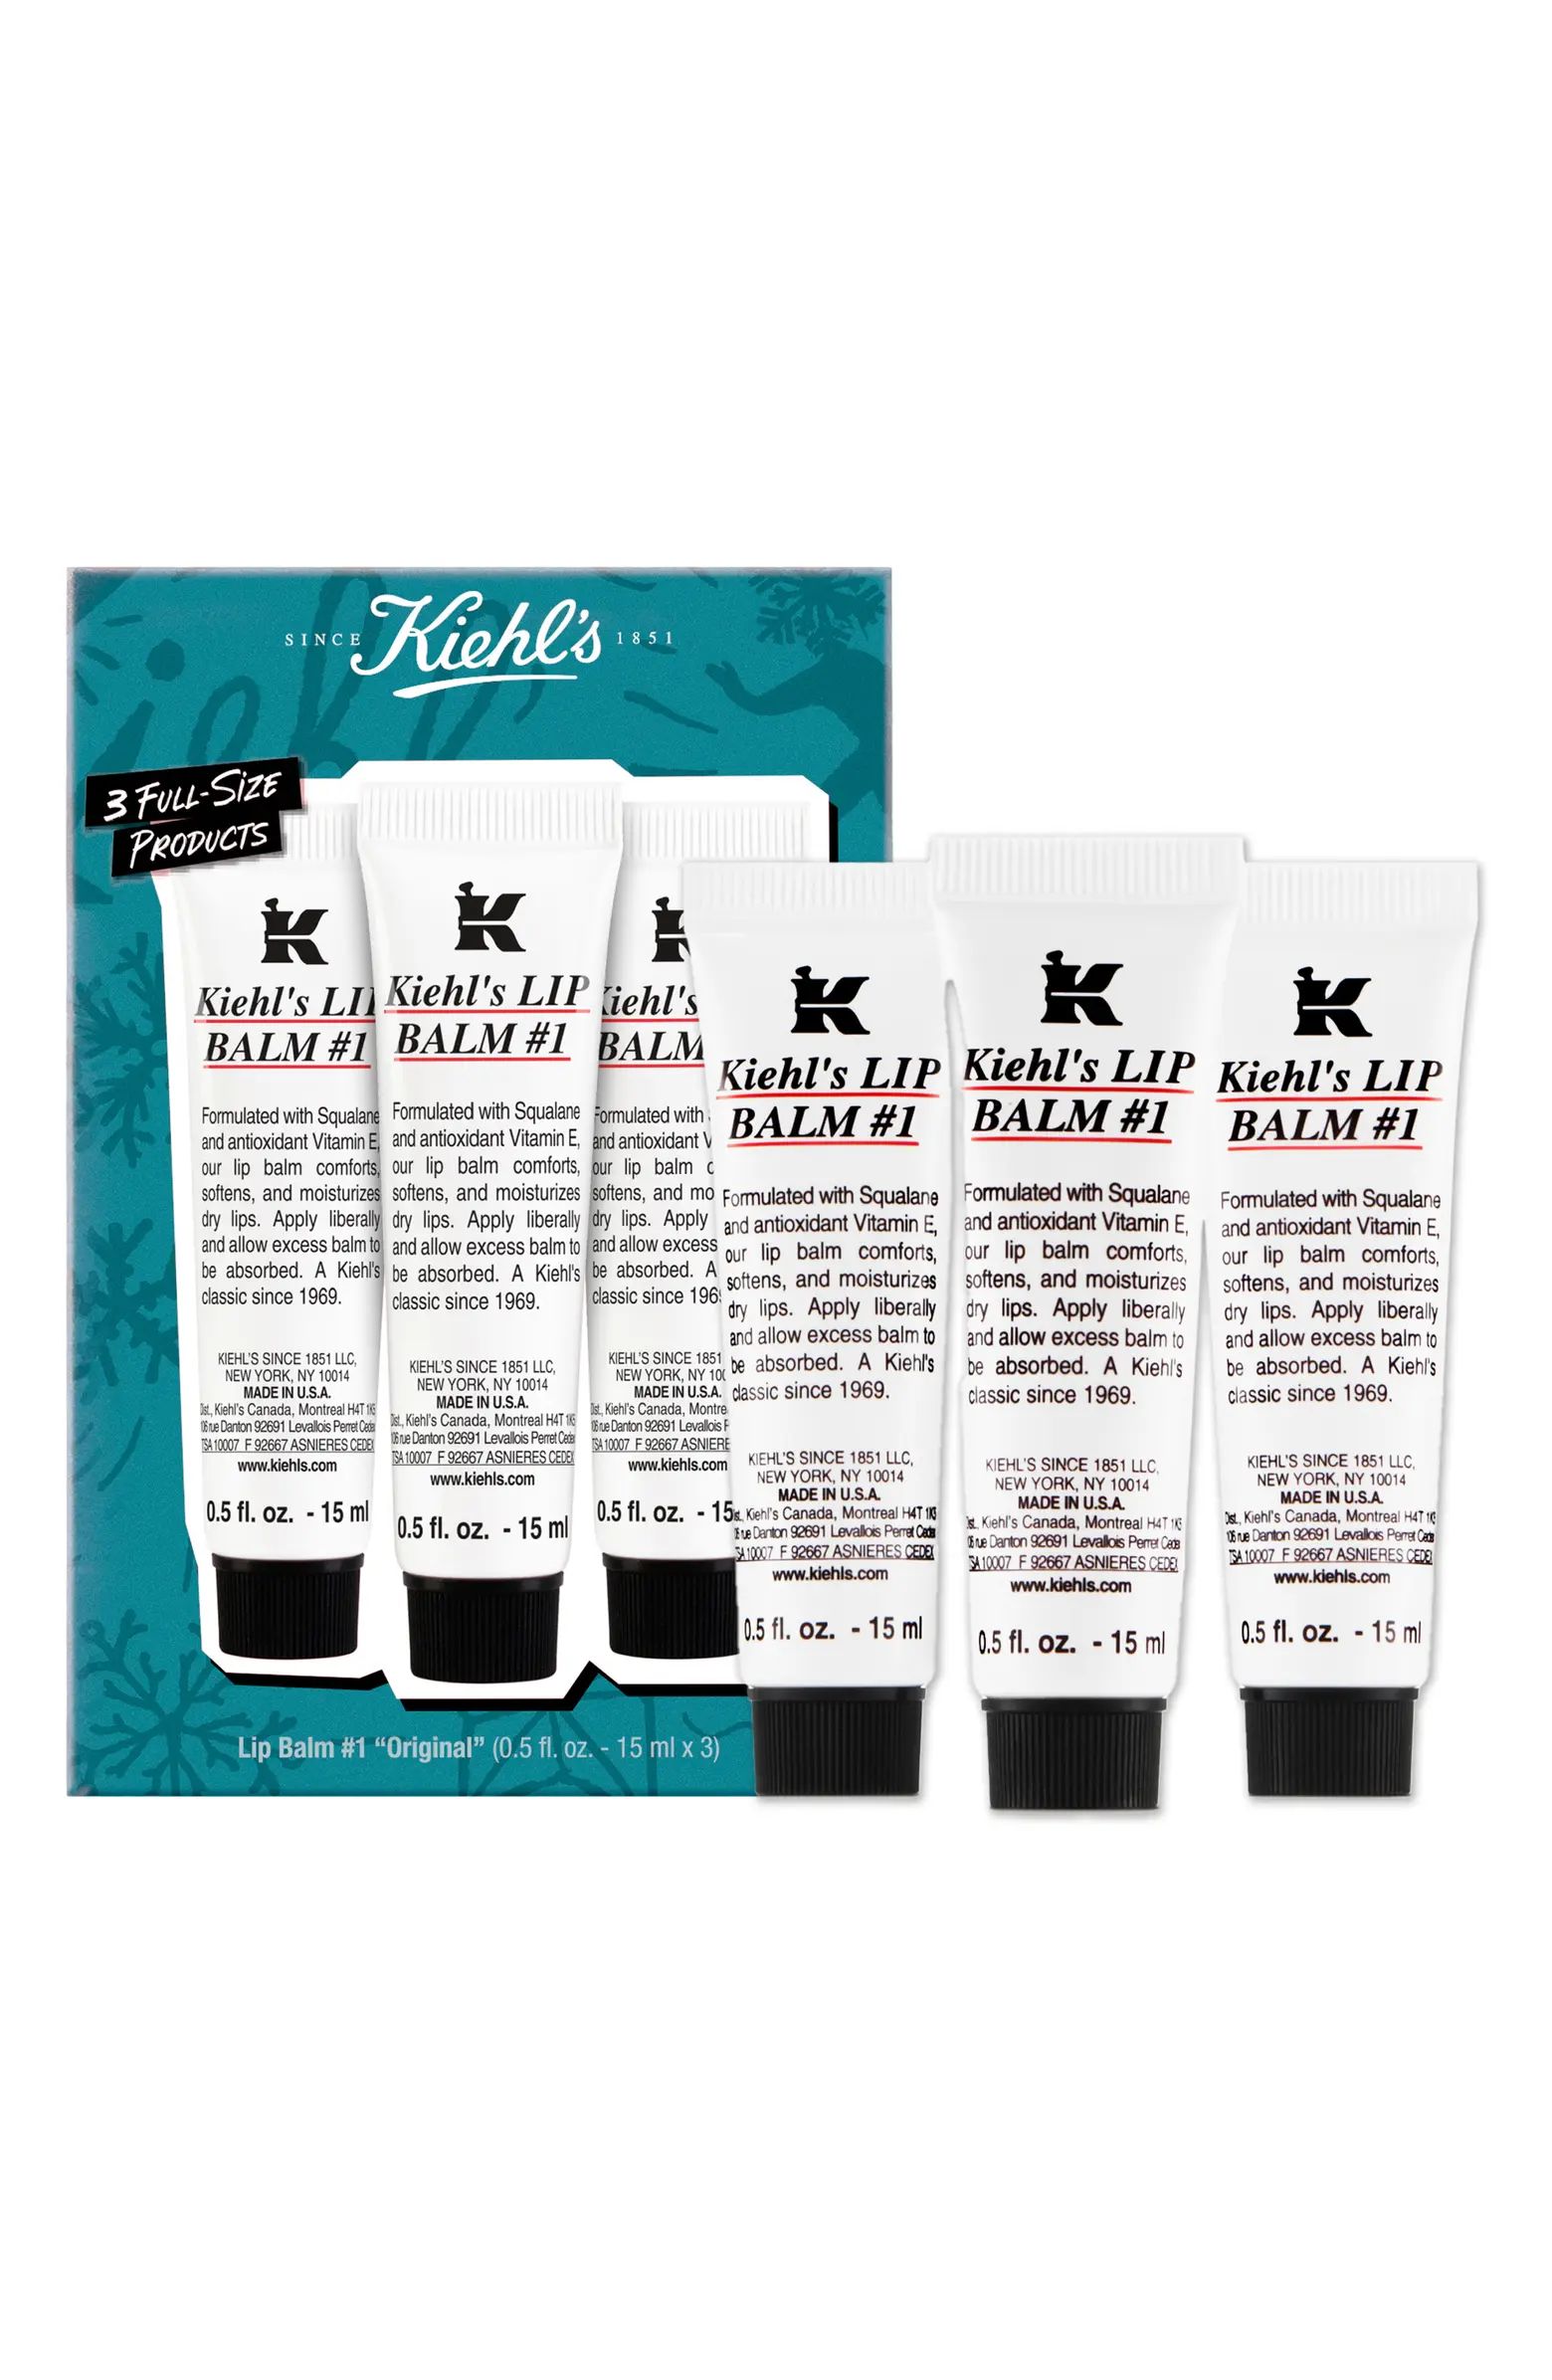 Kiehl's Since 1851 Kiss Me with Kiehl's Skin Care Gift Set $36 Value | Nordstrom | Nordstrom